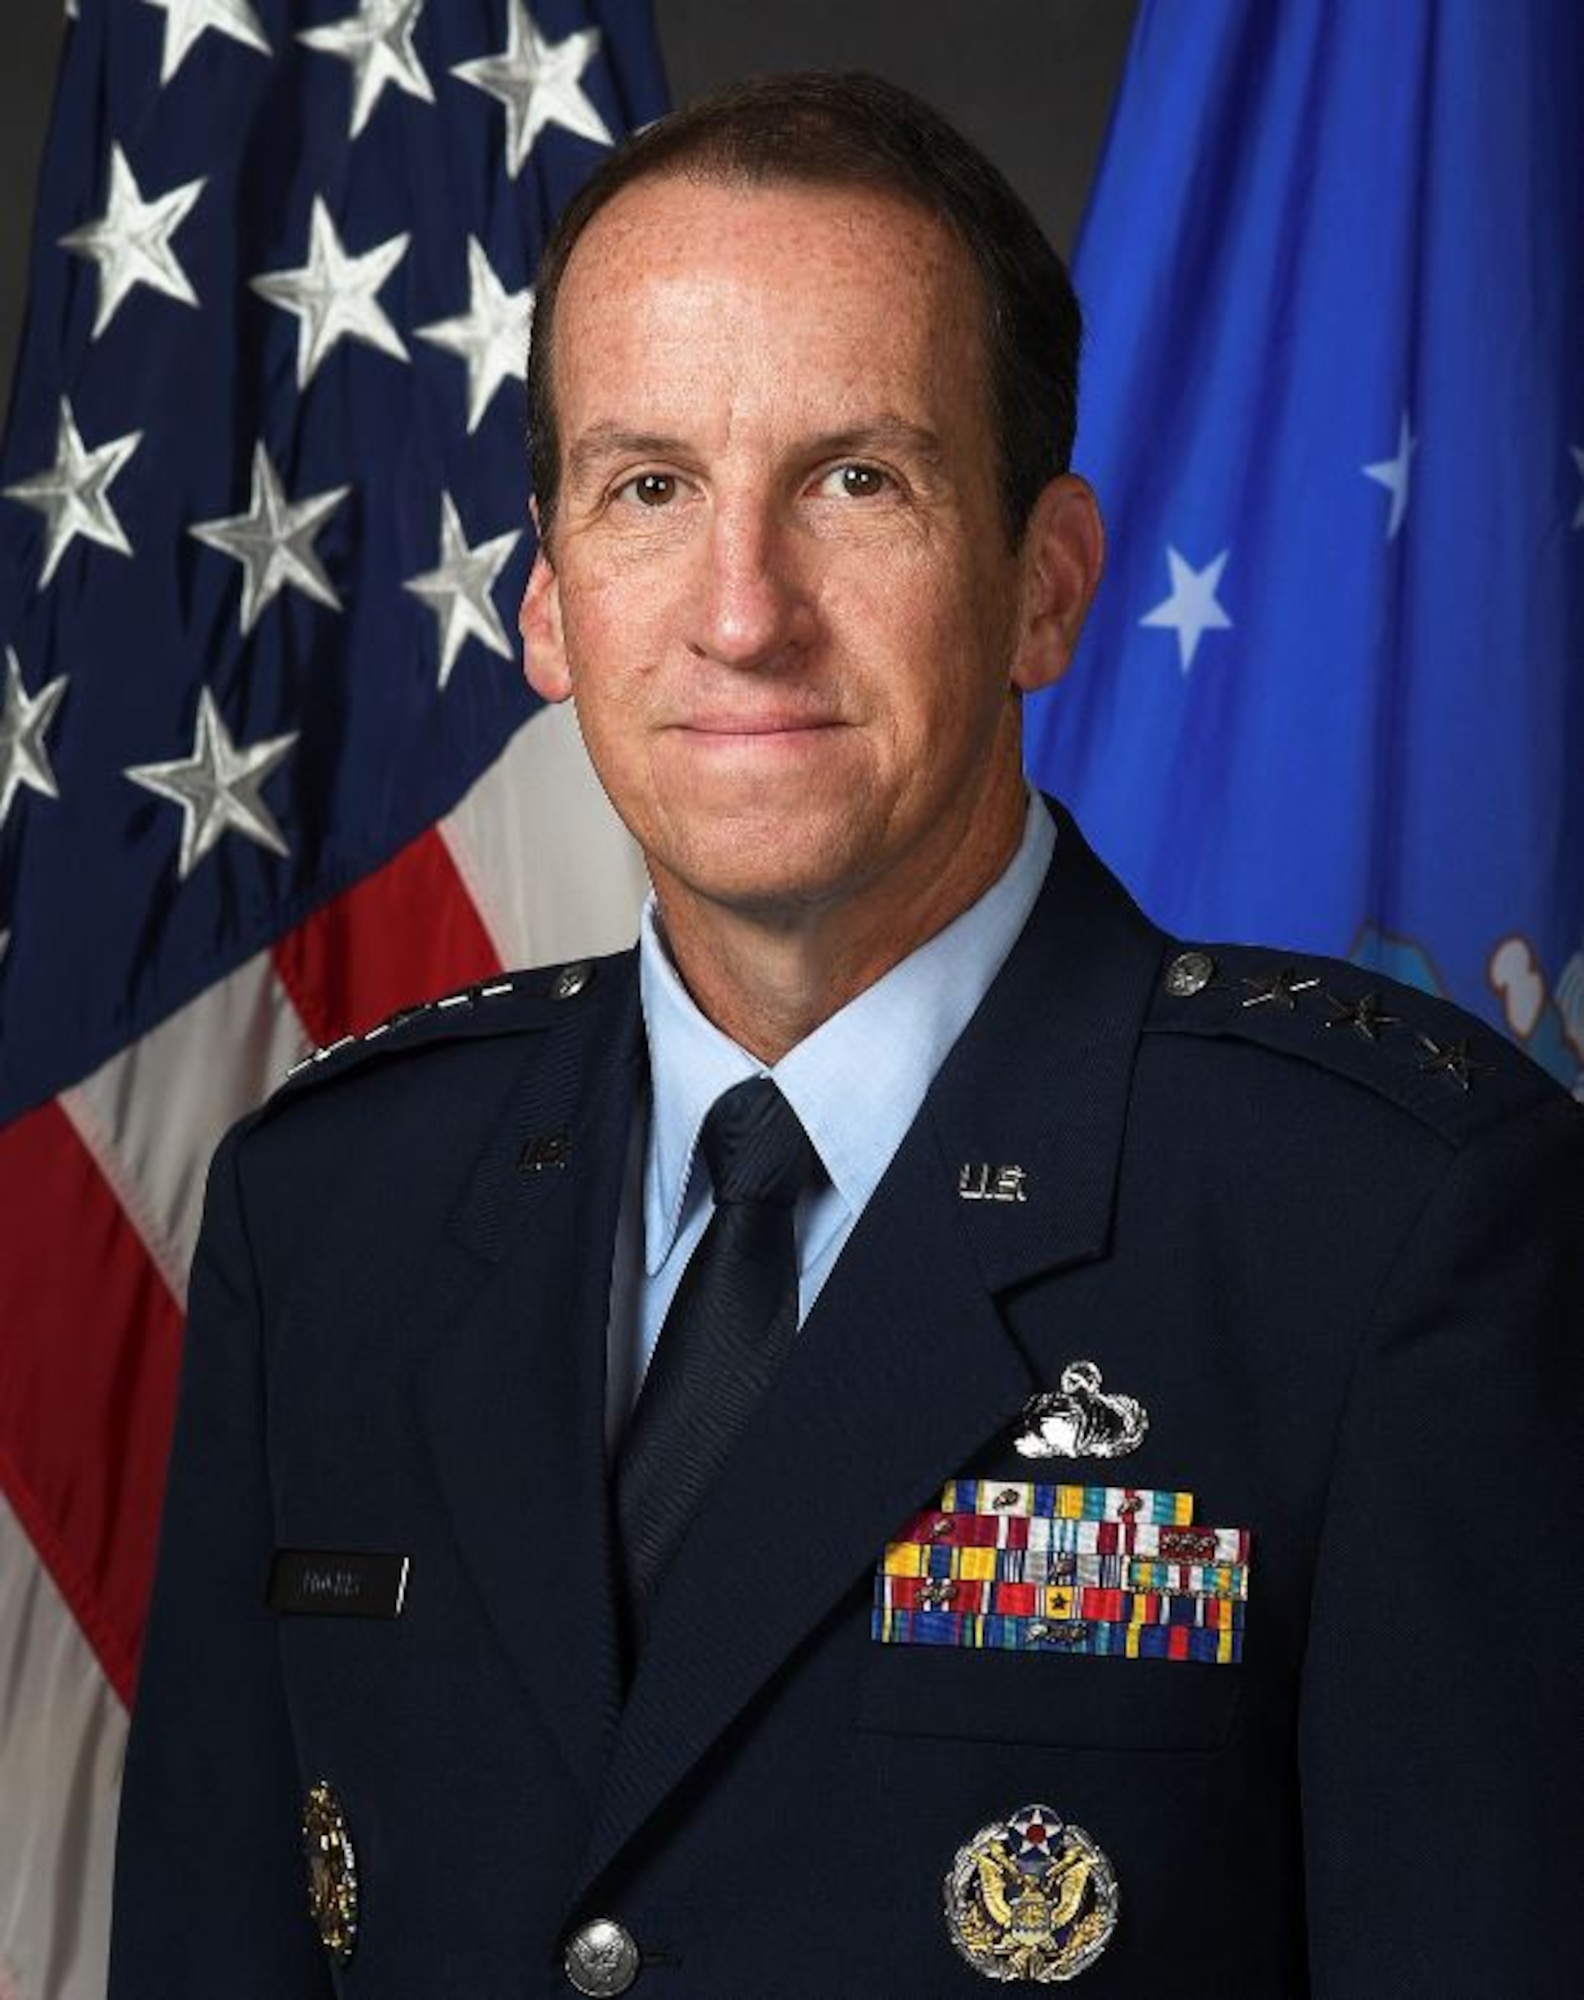 Lt. Gen. Shaun Morris, commander, Air Force Life Cycle Management Center